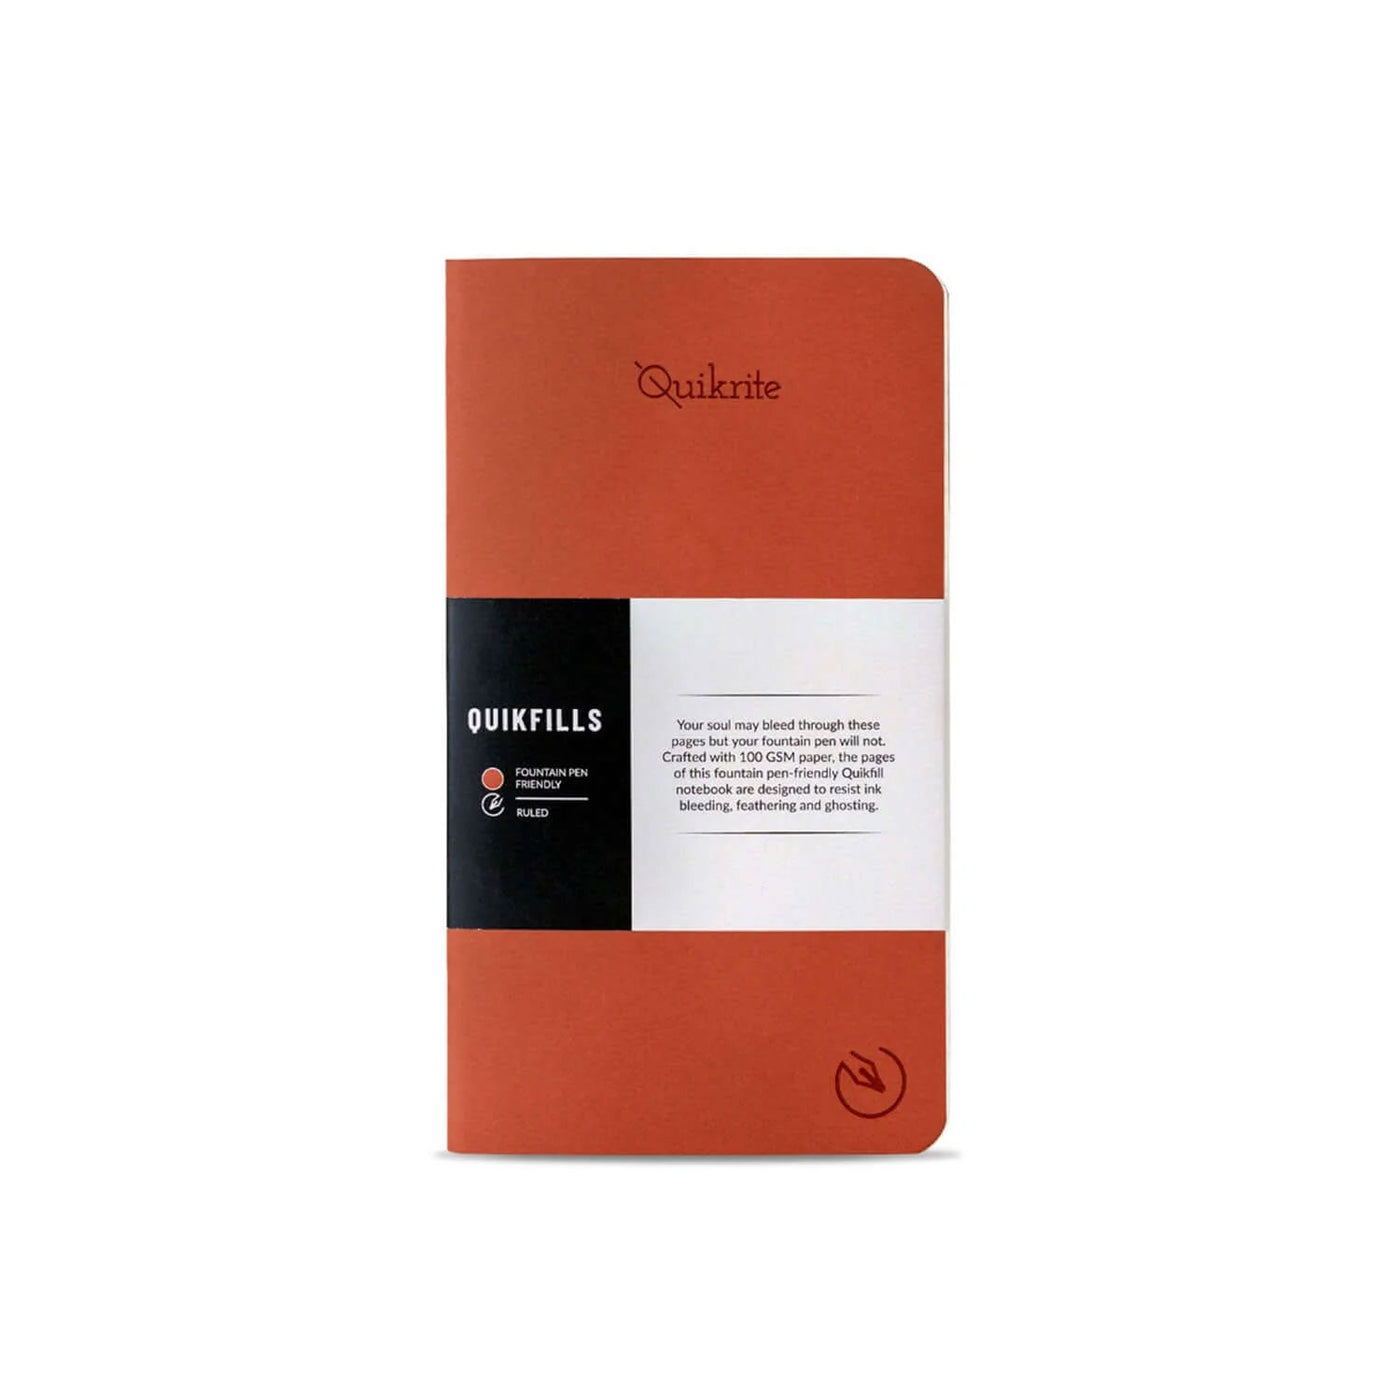 Pennline Quikfill Notebook Refill For Quikrite, Rust - Set Of 2 1